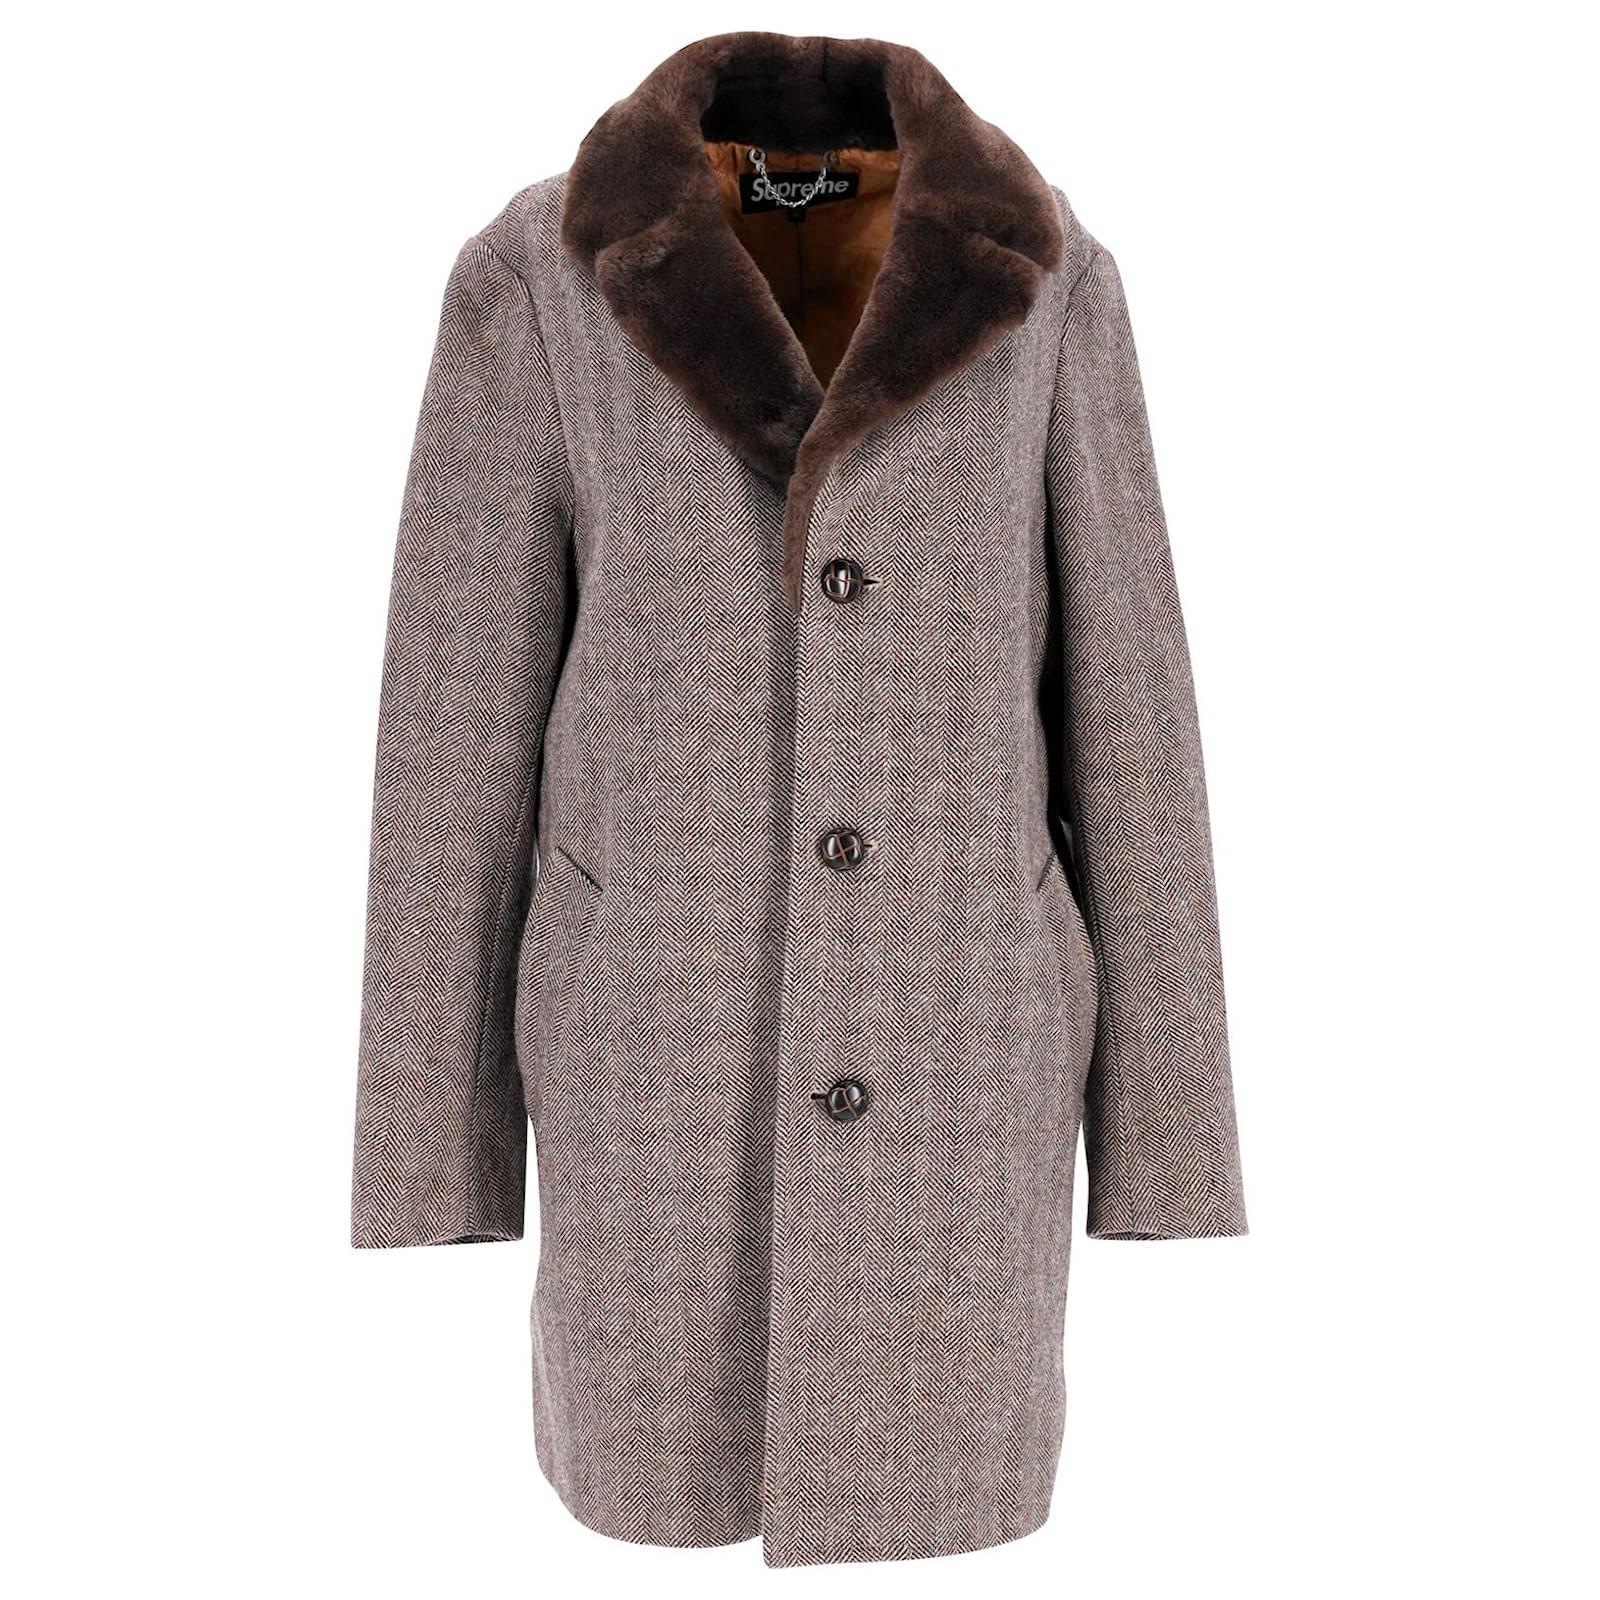 Supreme F/W 2015 Fur Collar Herringbone Coat in Brown Wool